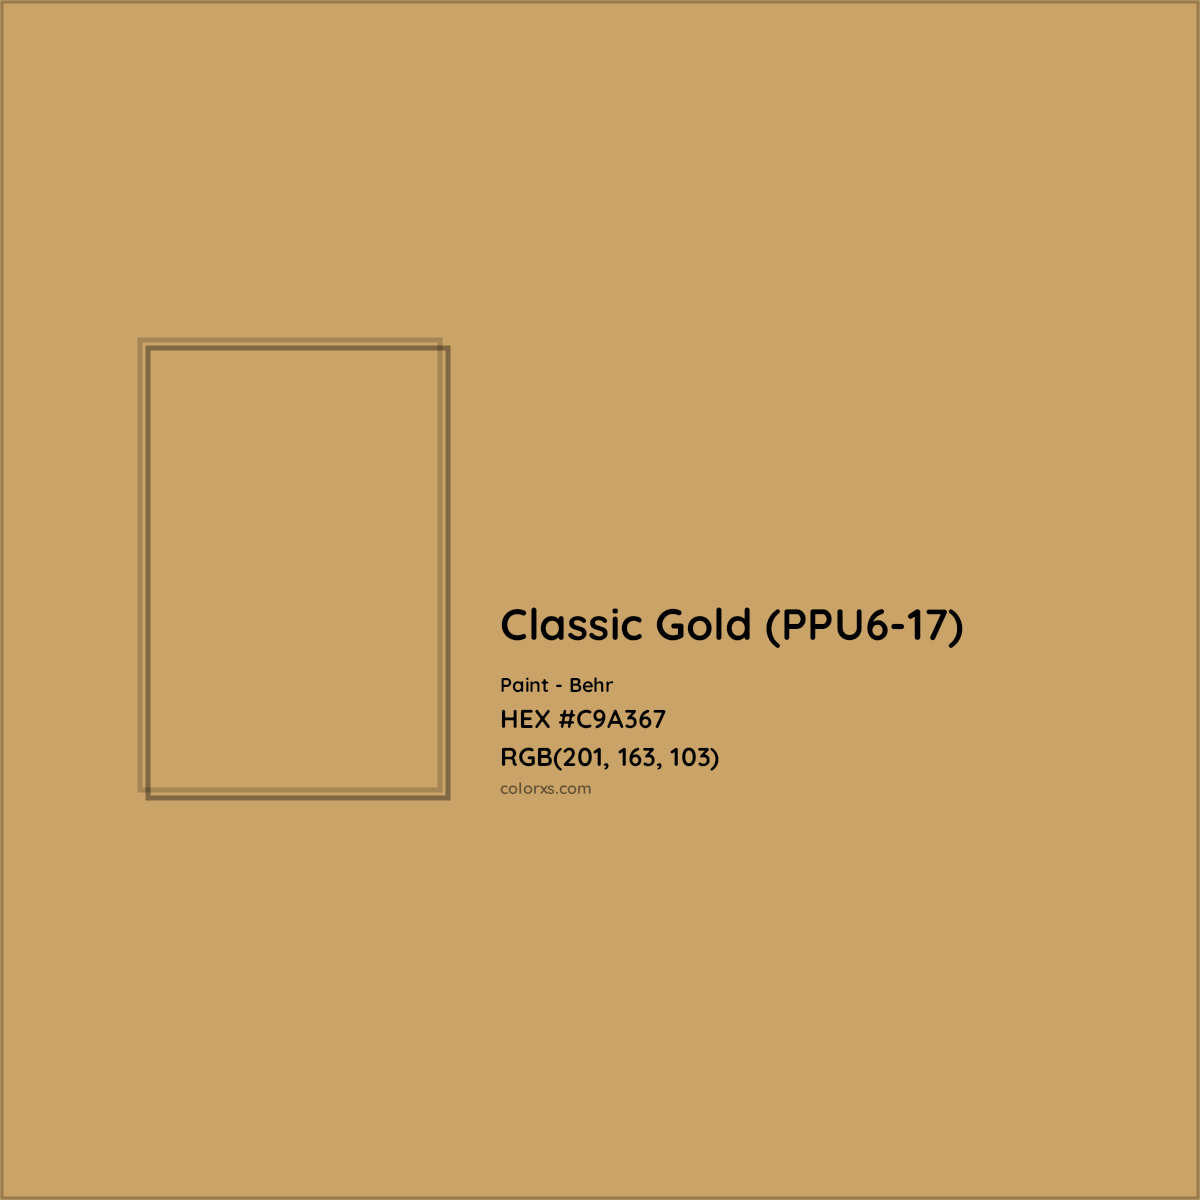 HEX #C9A367 Classic Gold (PPU6-17) Paint Behr - Color Code